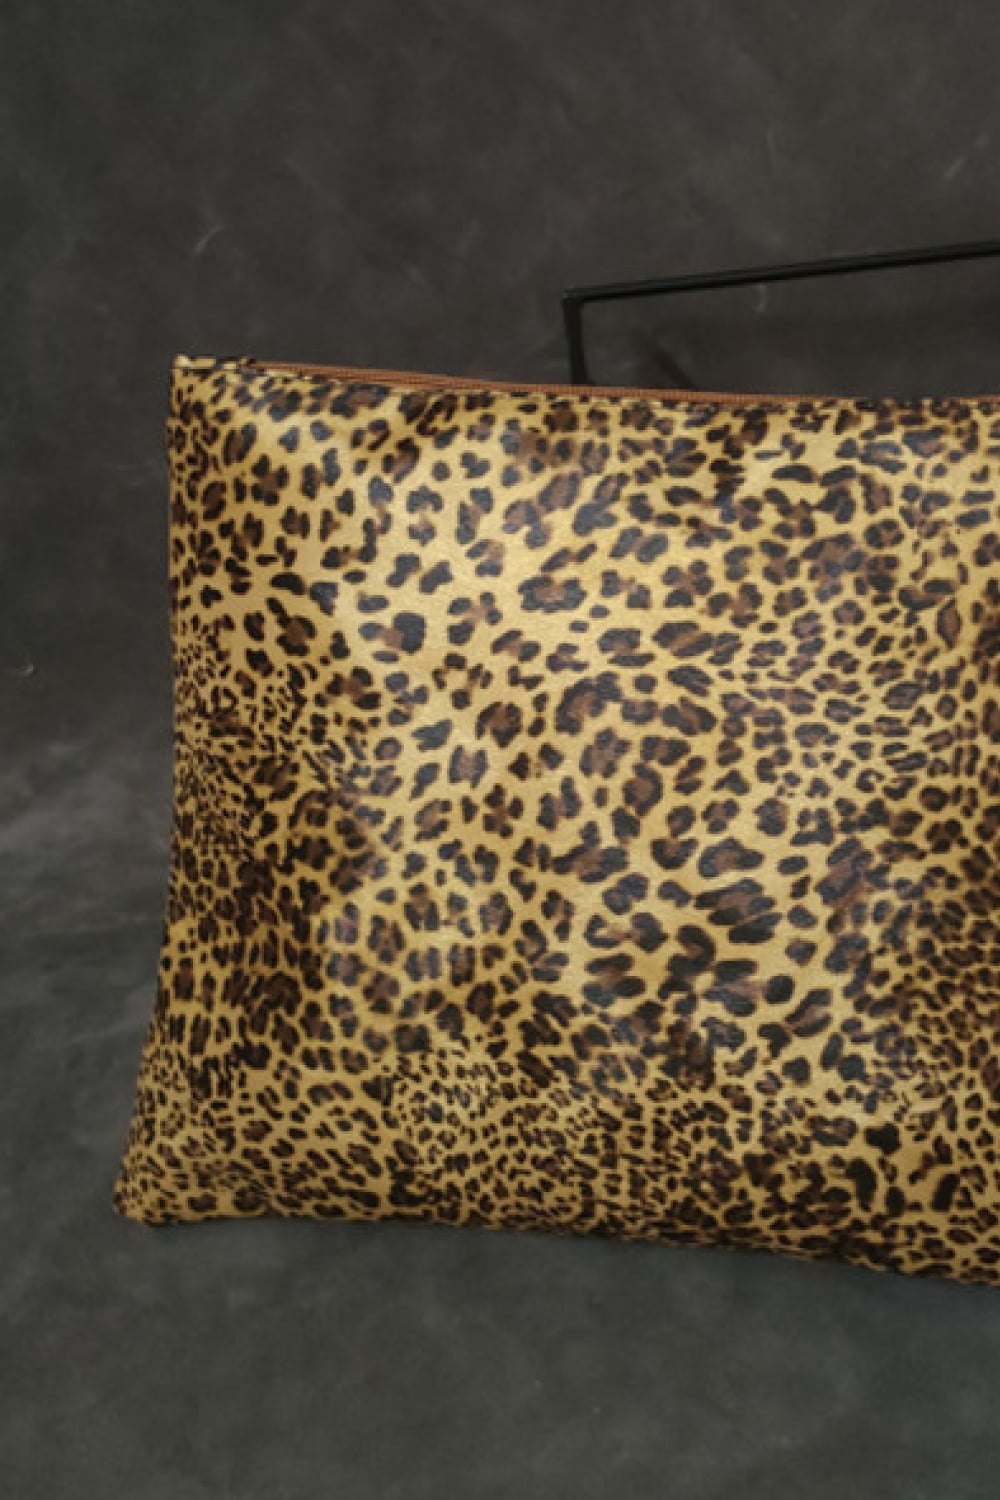 Leopard PU Leather Clutch - Handbag - FITGGINS